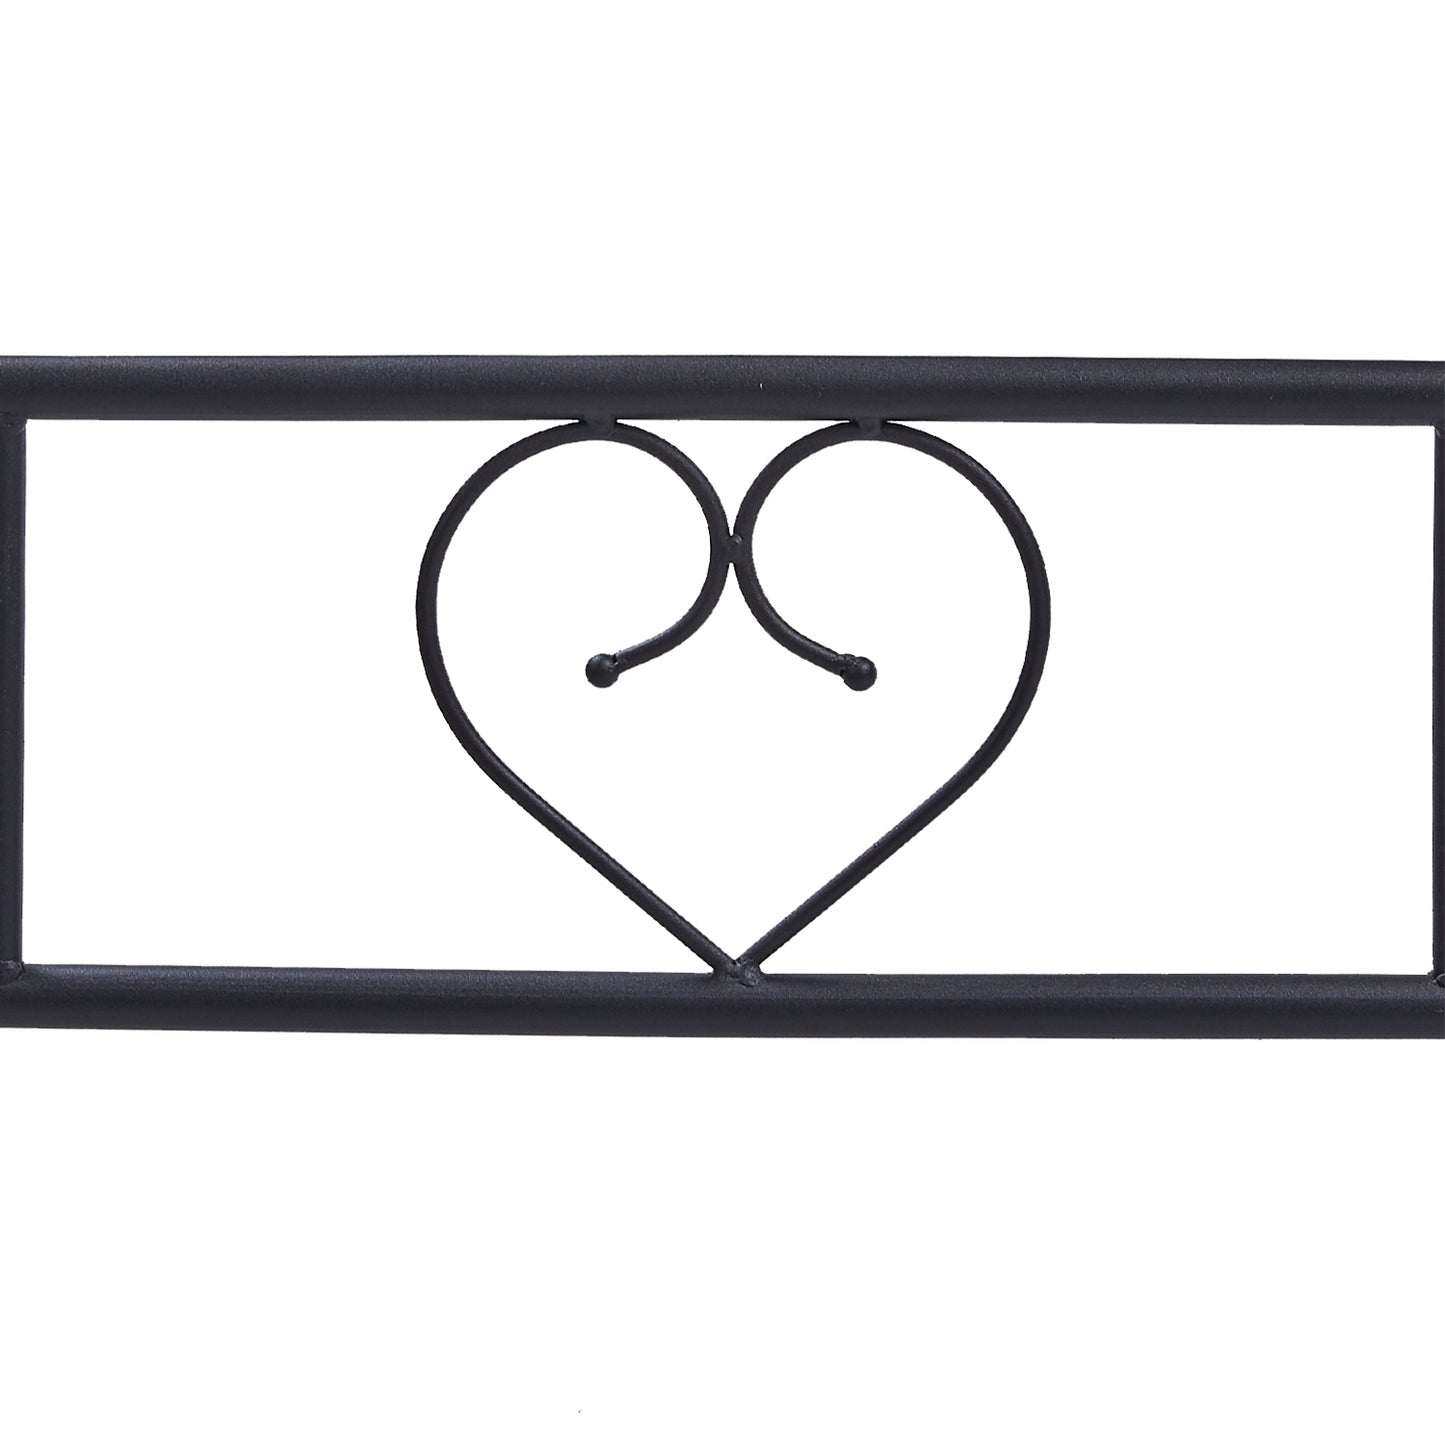 Heart-shaped Single/Double Metal Bed 94 * 196 cm/143 * 196 cm - Black